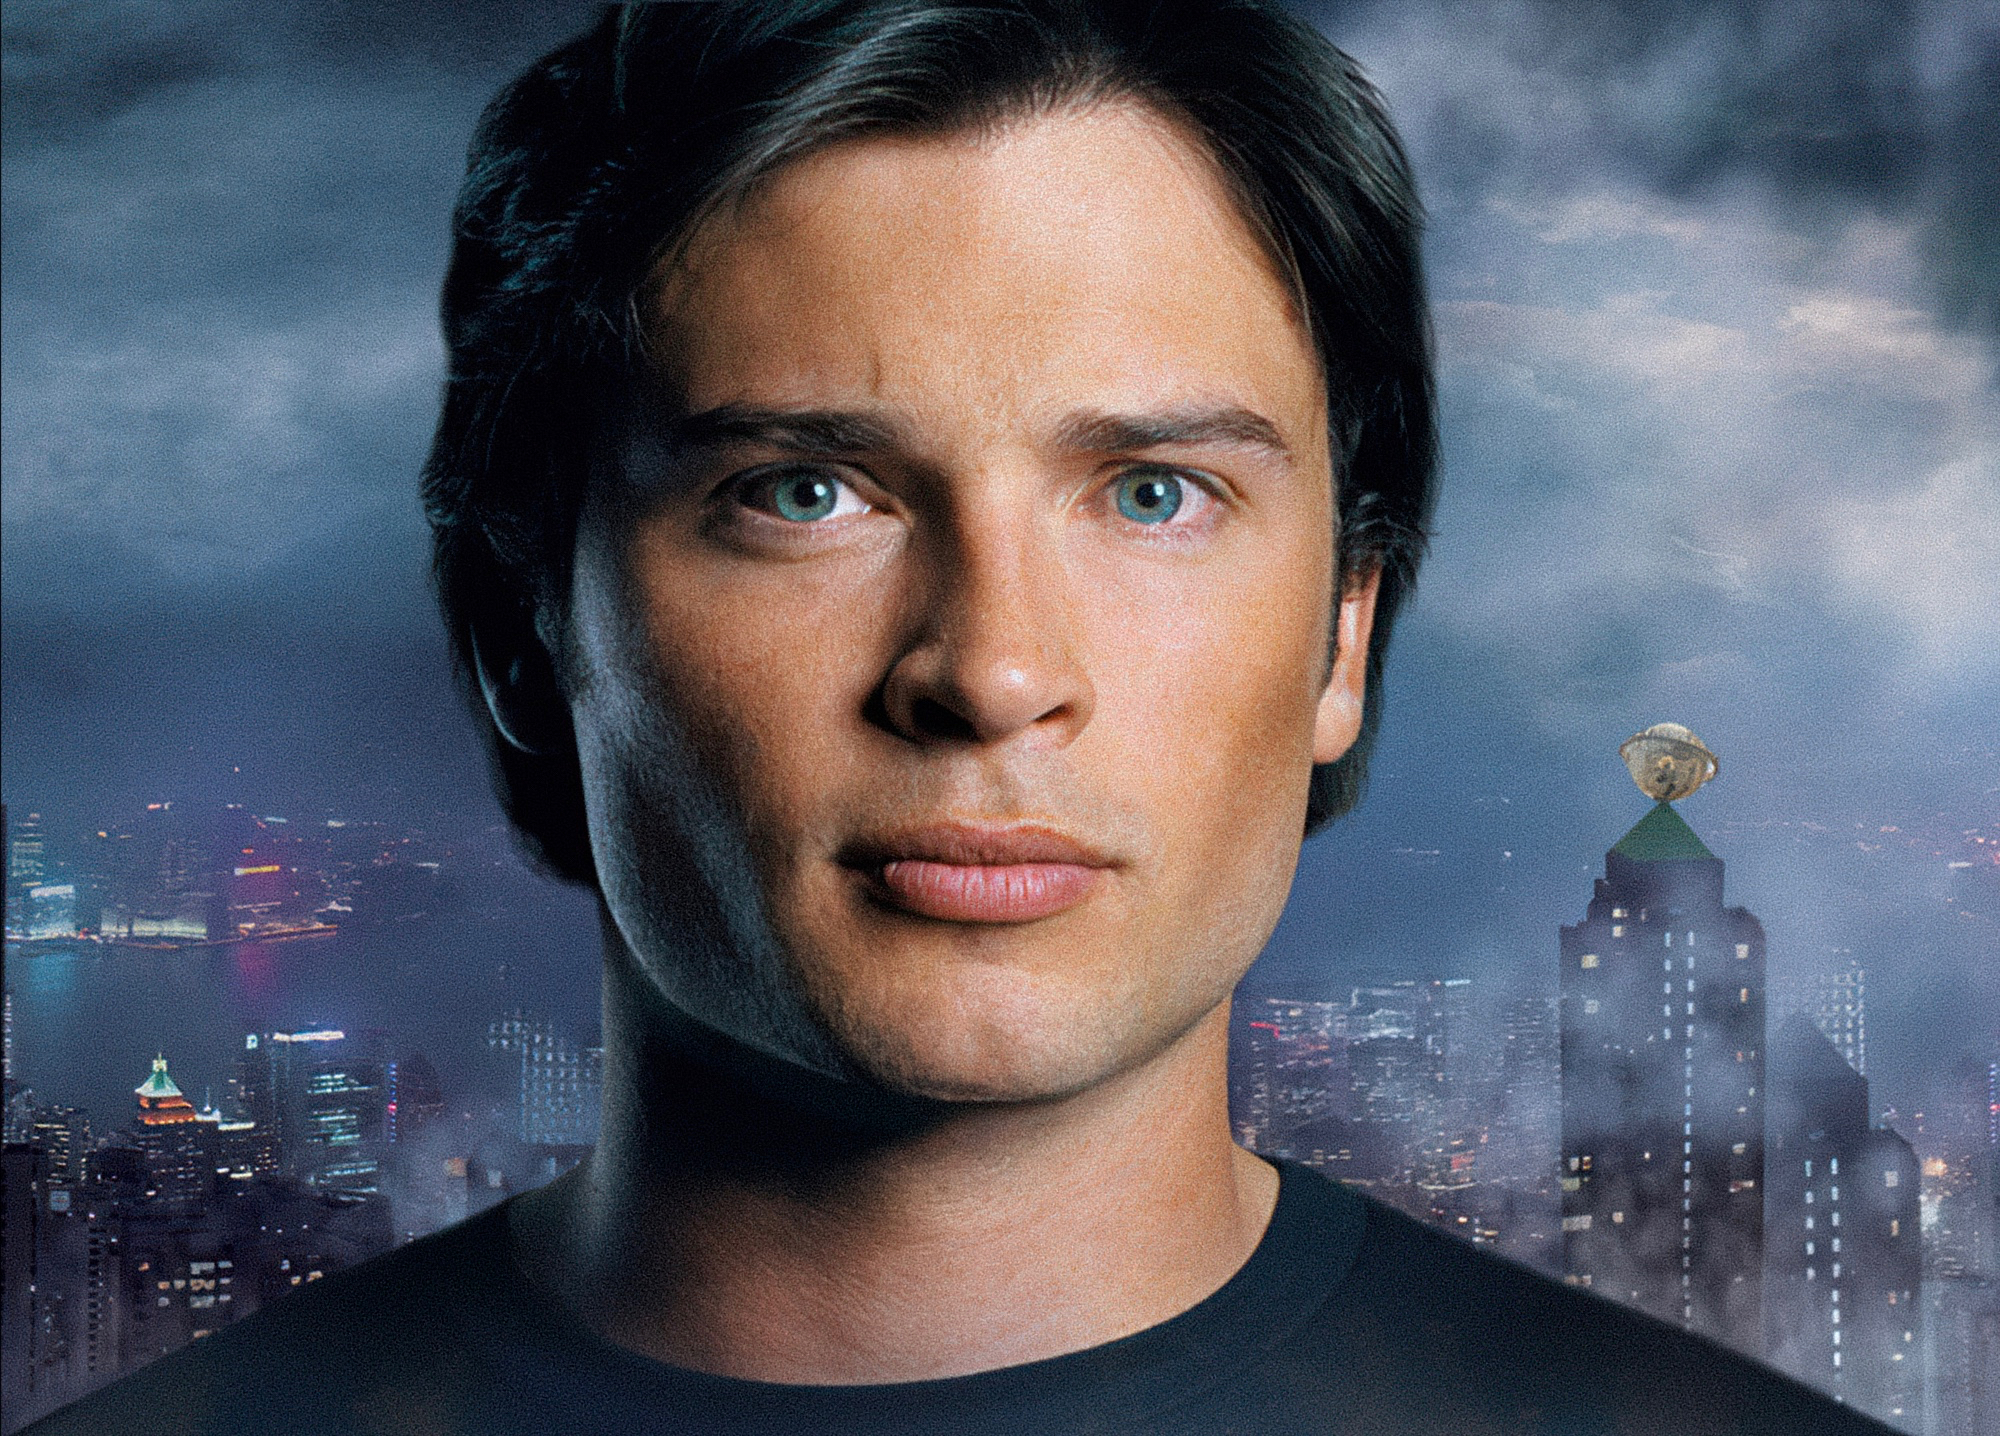 TV Show Smallville HD Wallpaper | Background Image